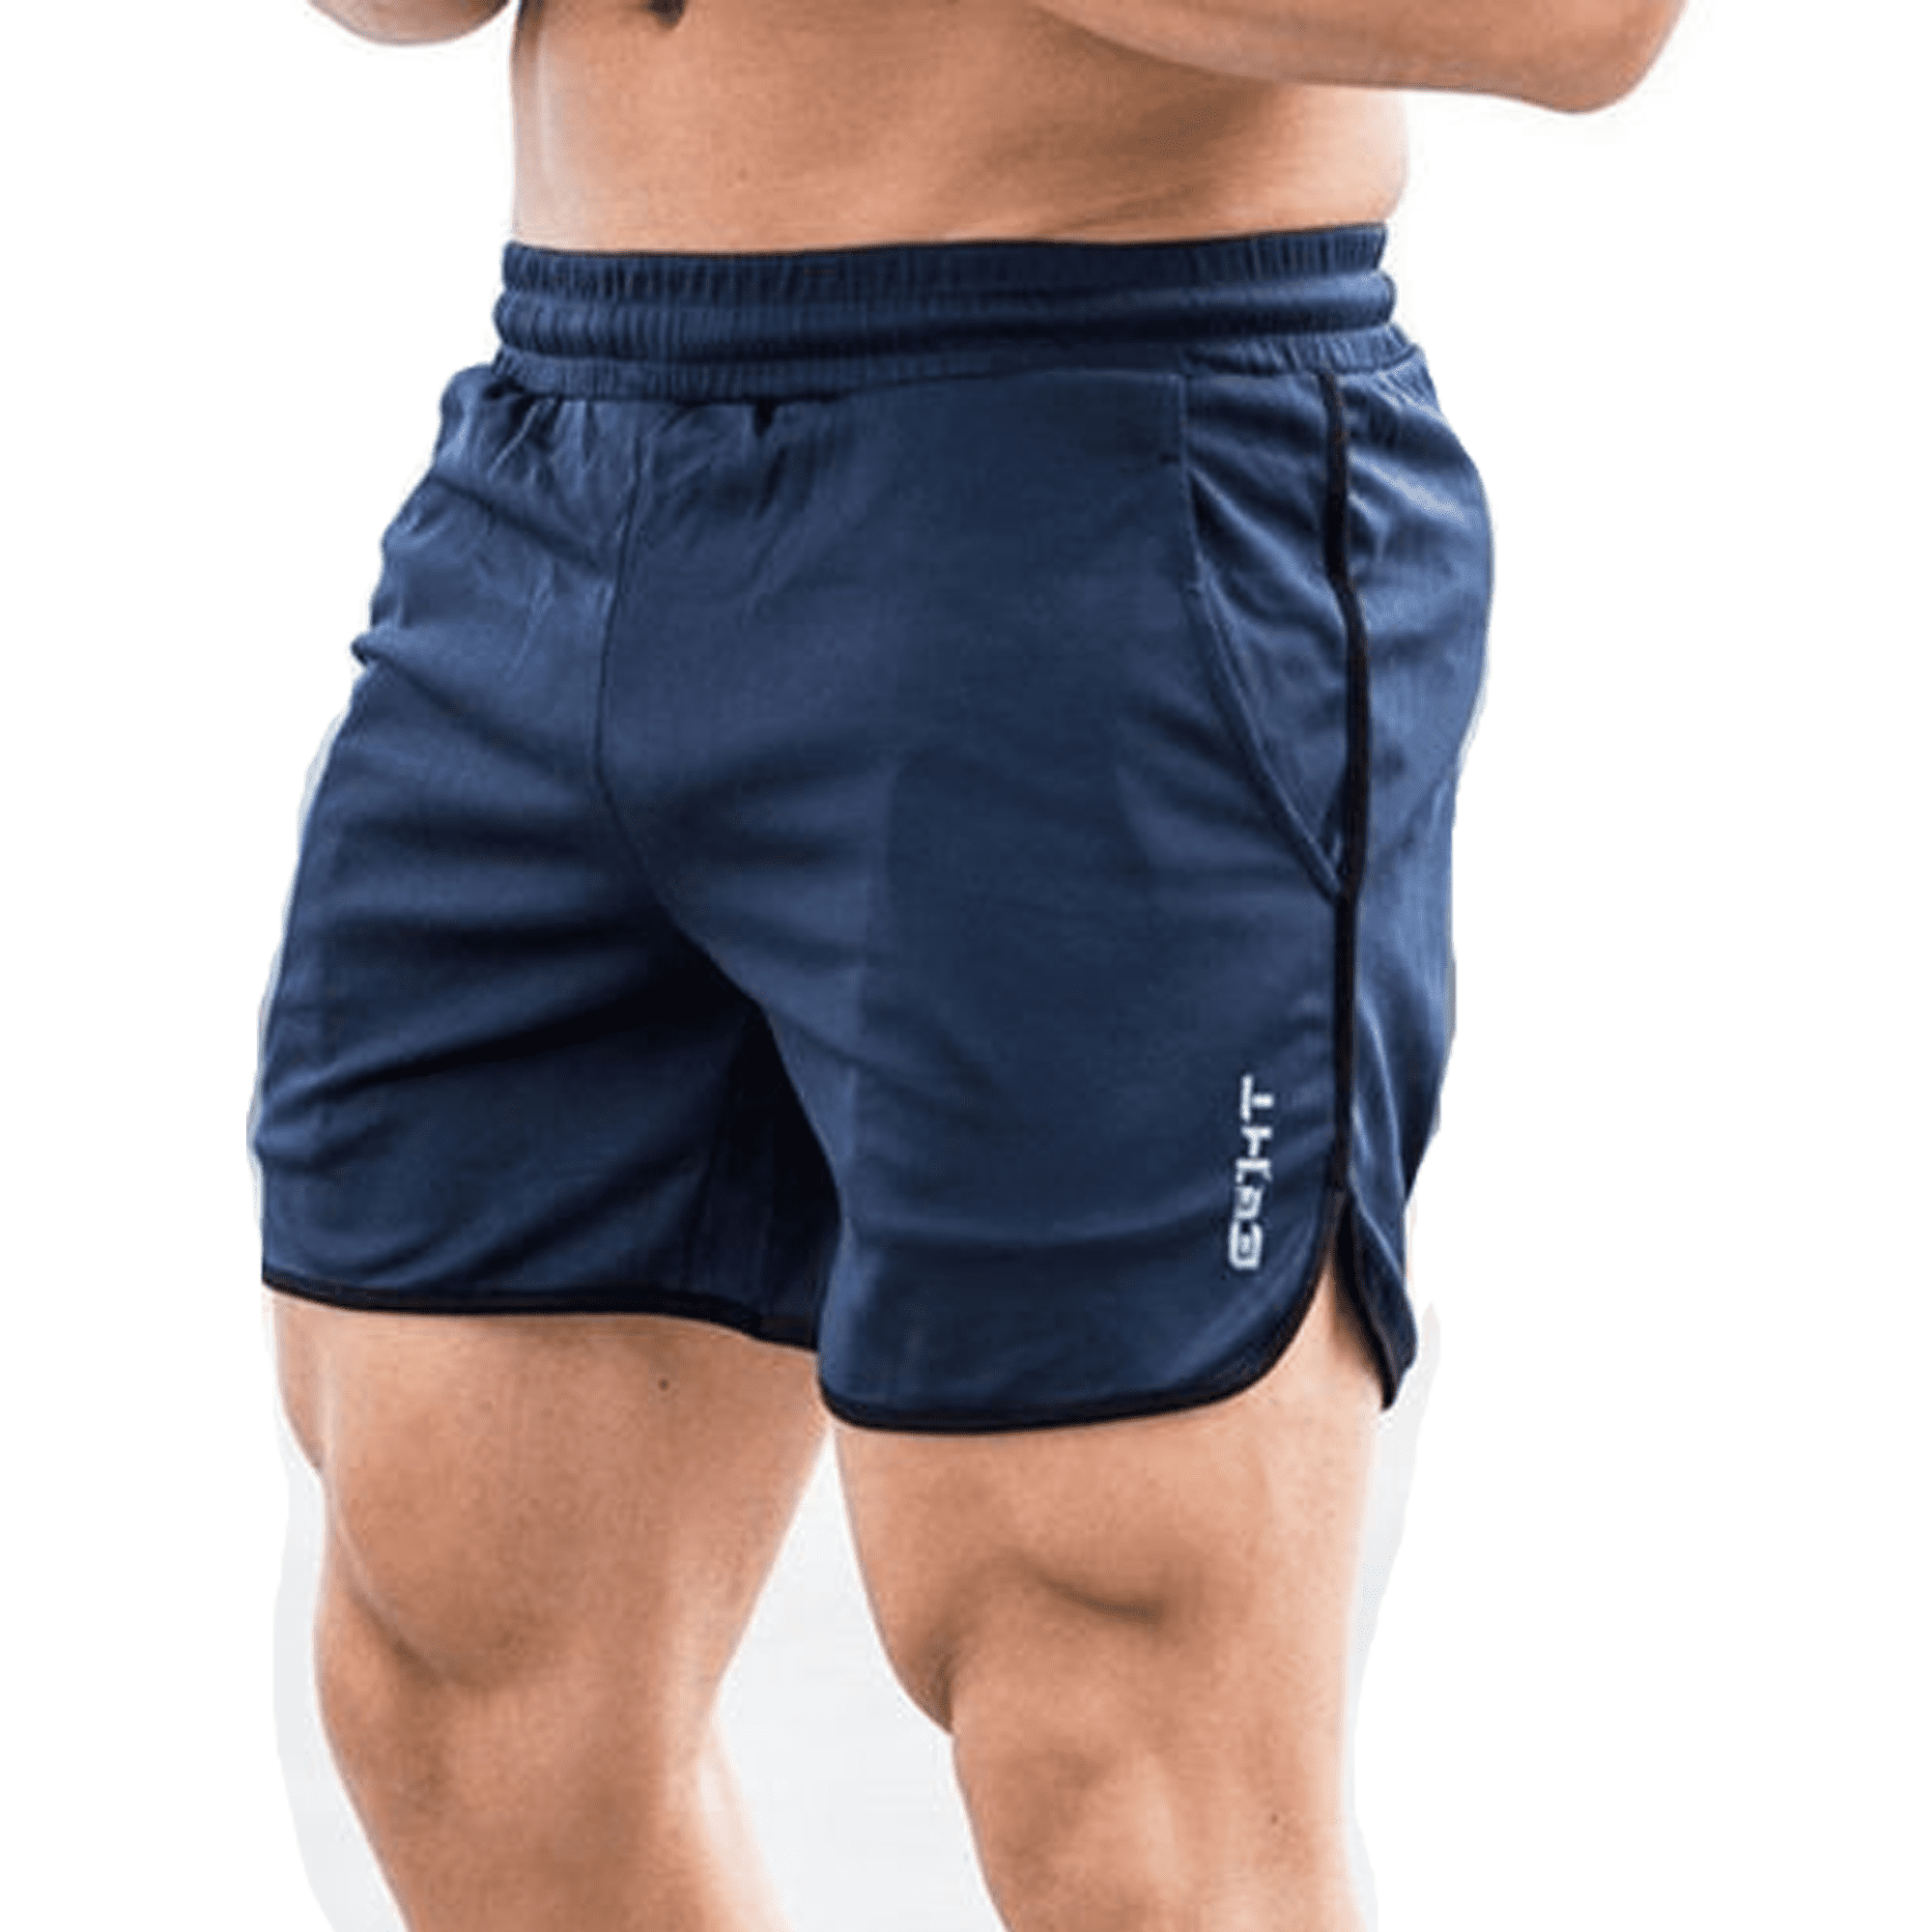 Men's Sports Training Bodybuilding Summer Shorts Workout Fitness GYM Short Pants